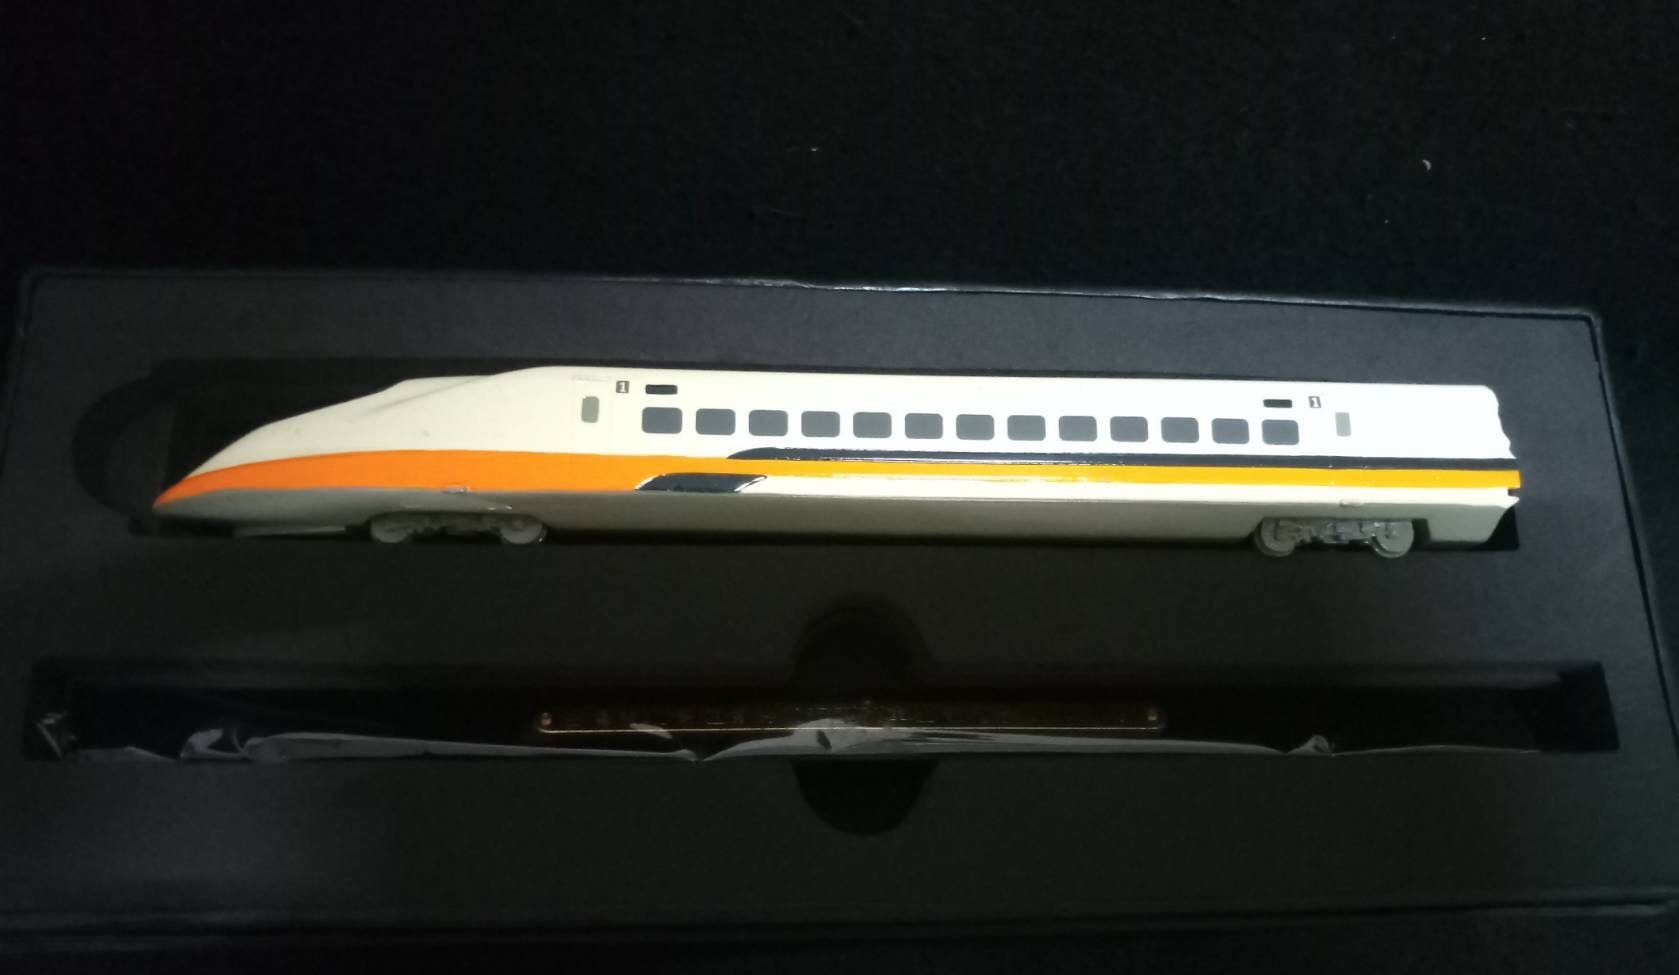 【Sun art -七絕樓】台灣高鐵700T型列車，2004年出廠紀念款模型。